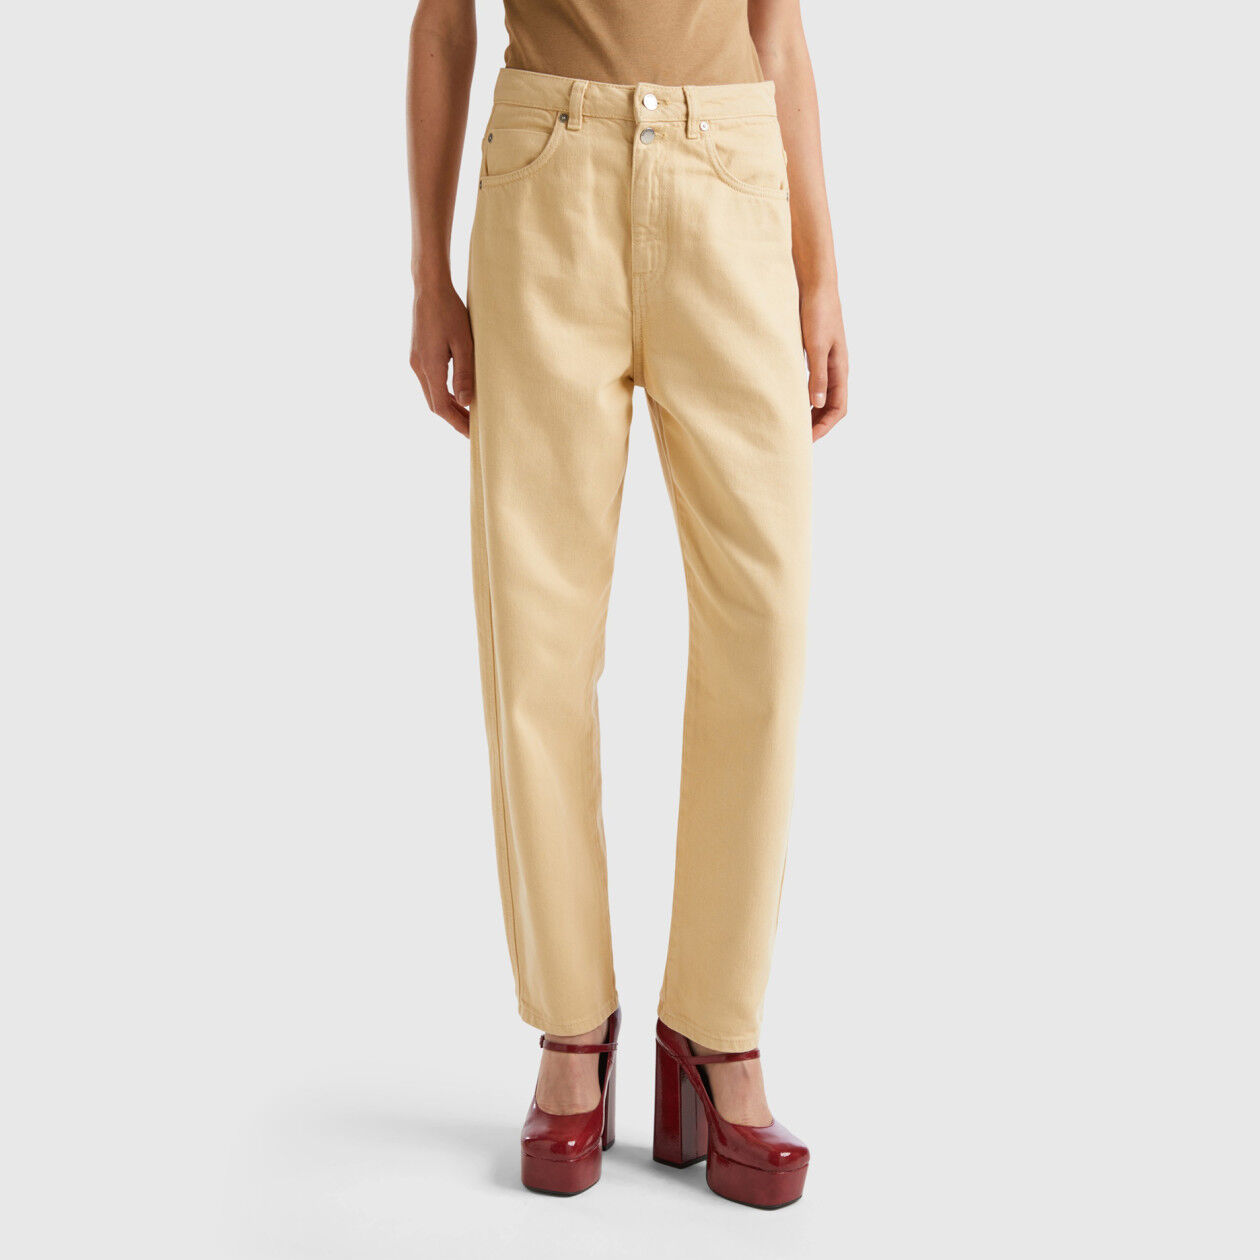 Regular fit trousers - Pink | Benetton